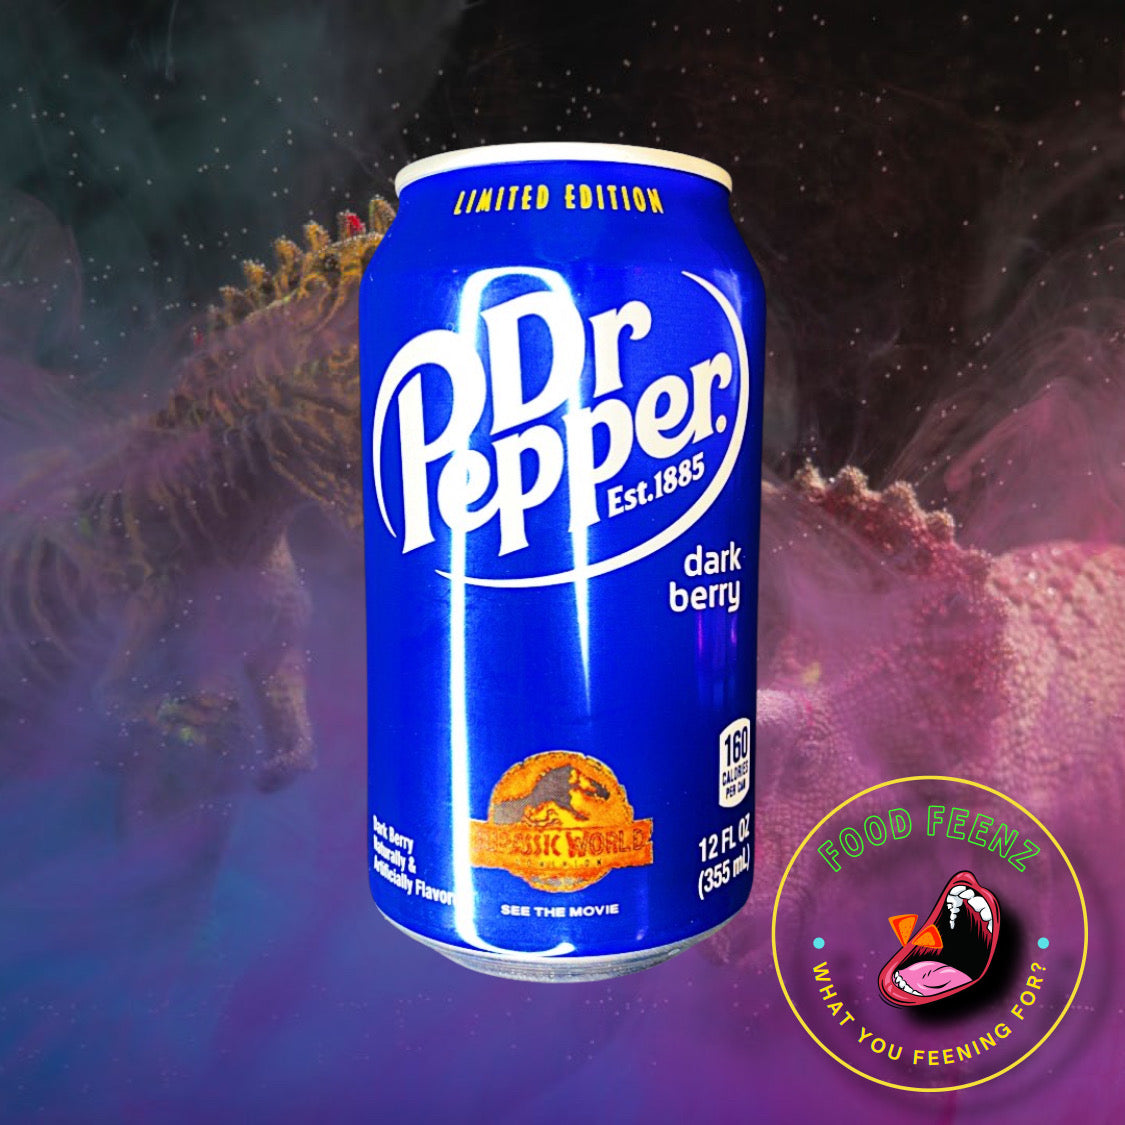 Jurassic Park Dr Pepper Dark Berry (Limited Edition)